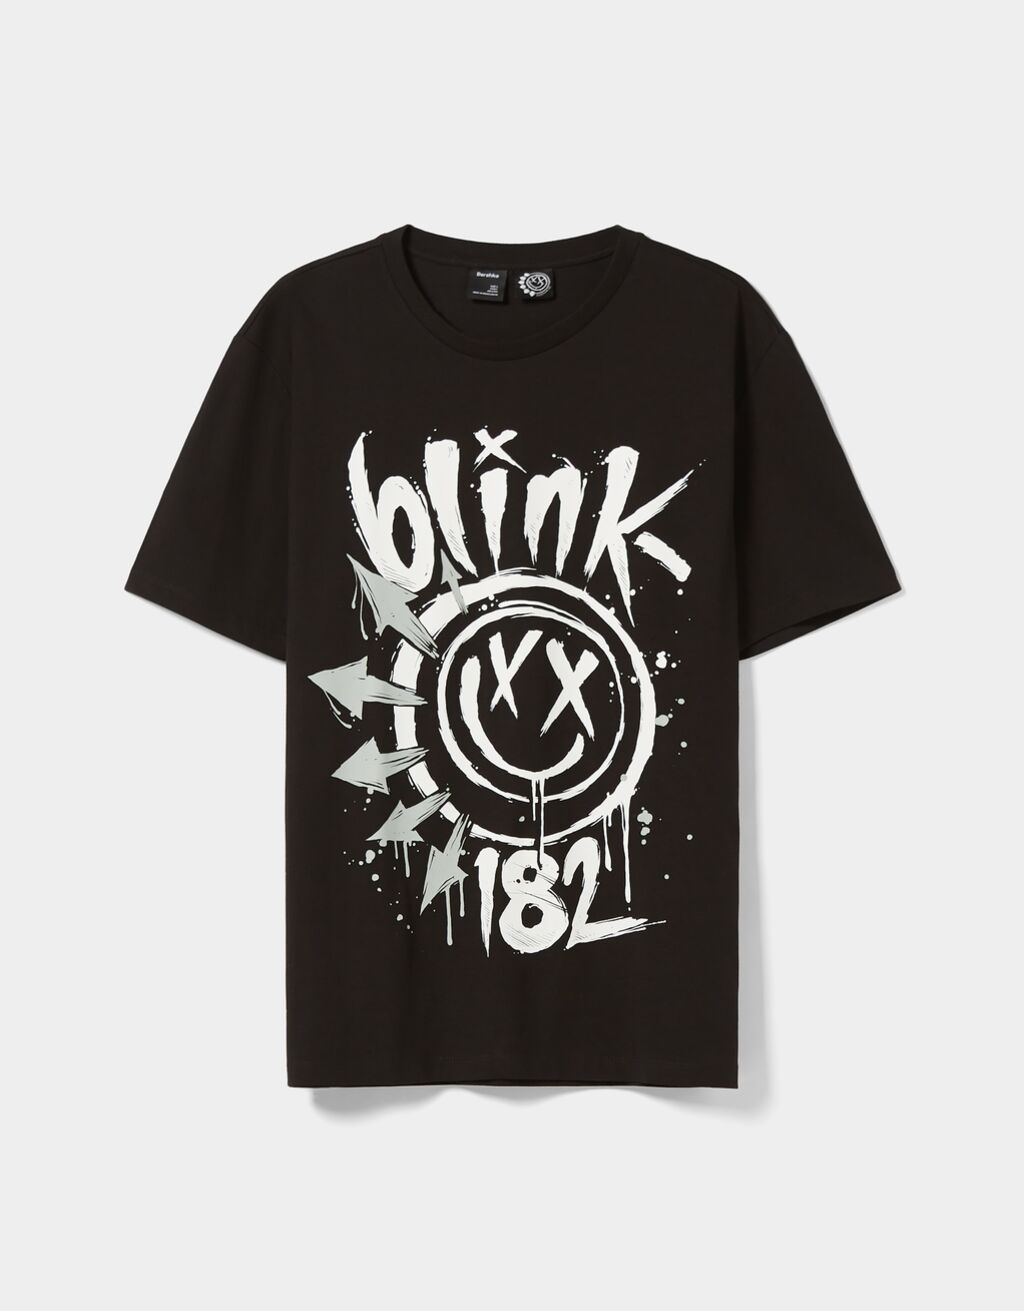 Camiseta manga corta regular fit print Blink 182